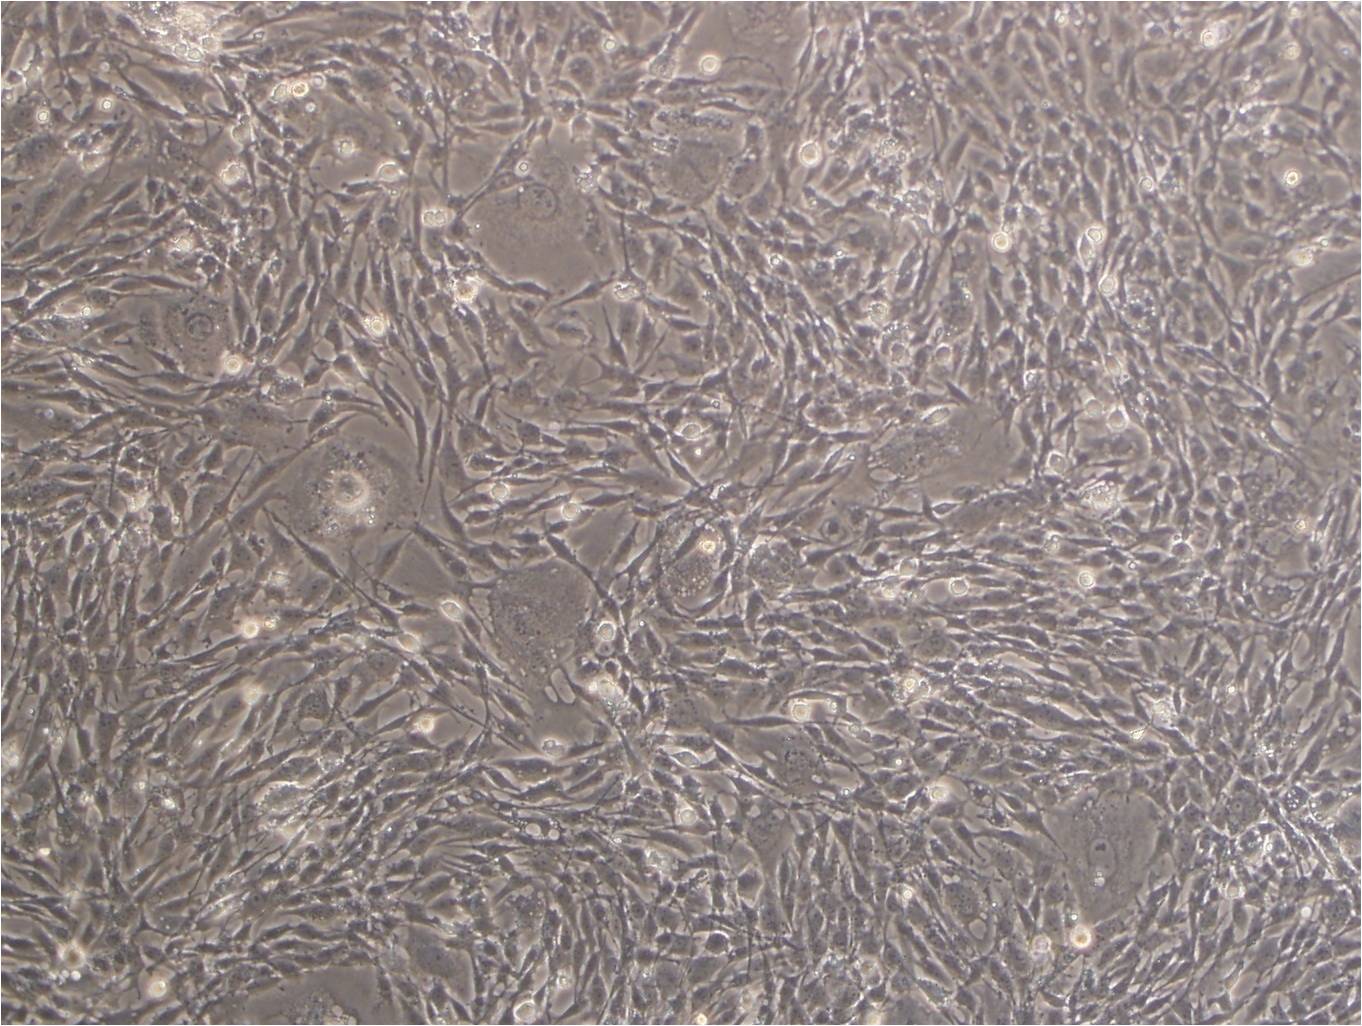 SW1088 Cell:人脑星形胶质瘤细胞系,SW1088 Cell